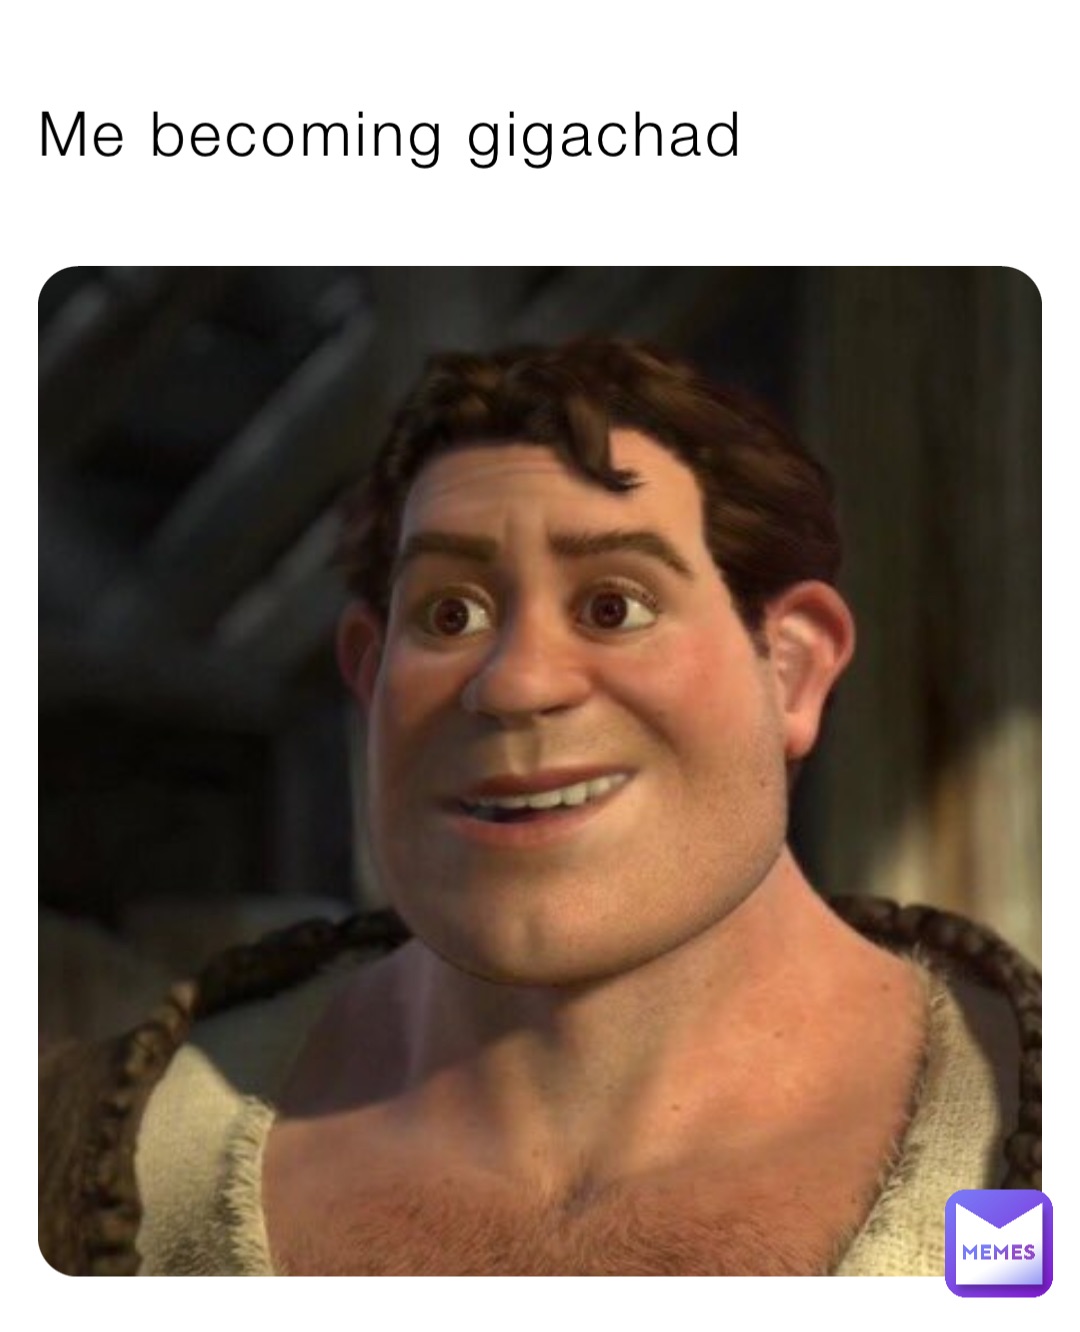 Me becoming gigachad